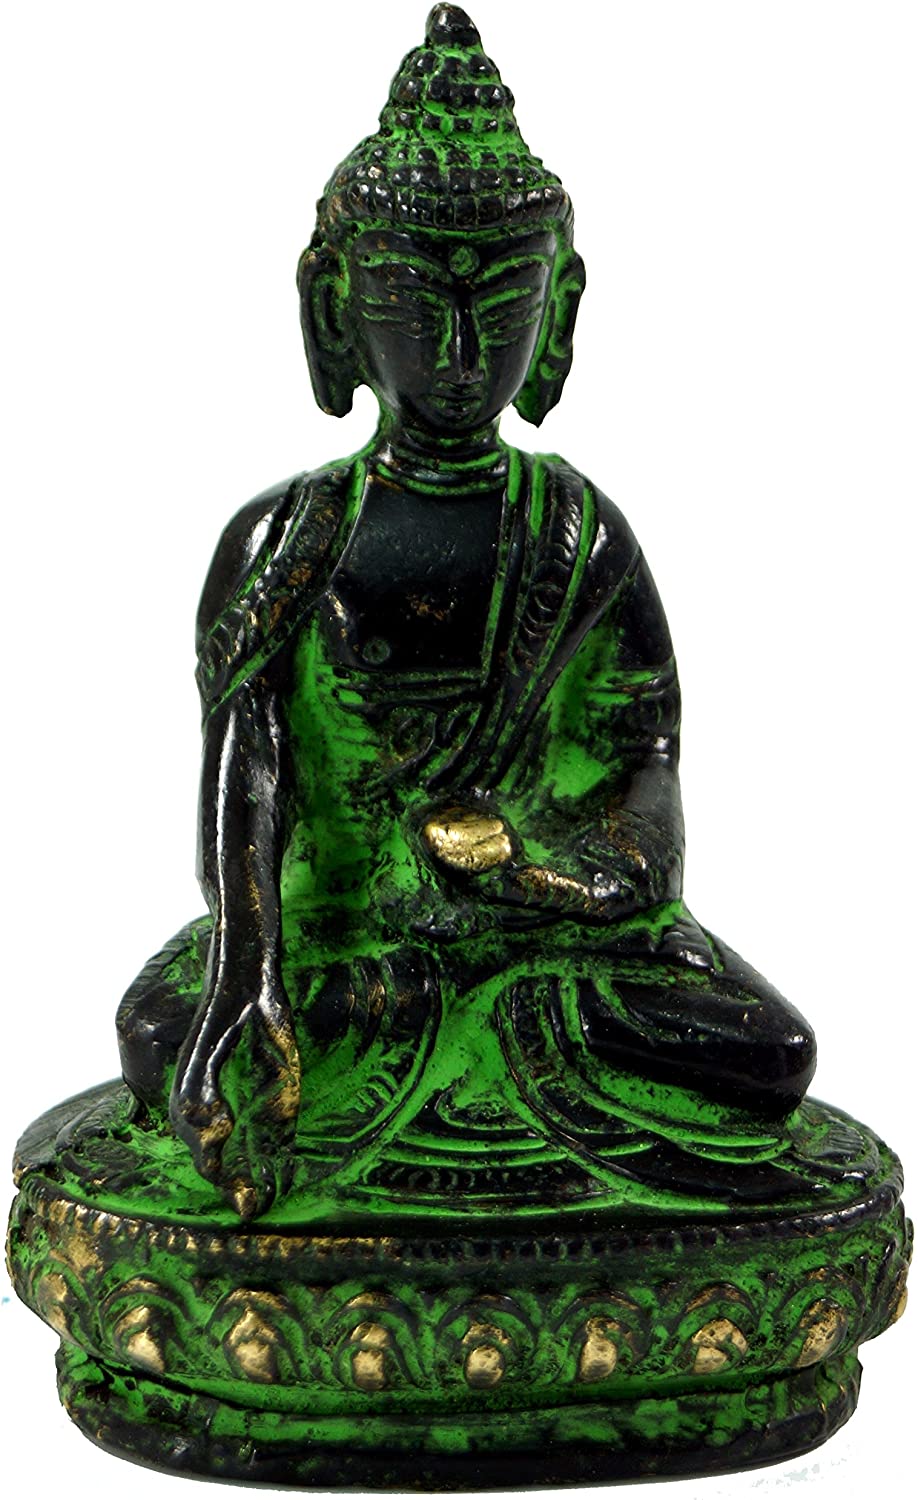 GURU SHOP Buddha Statue Brass Bhumisparsa Mudra 10 cm - Model 1, Green Buddhas